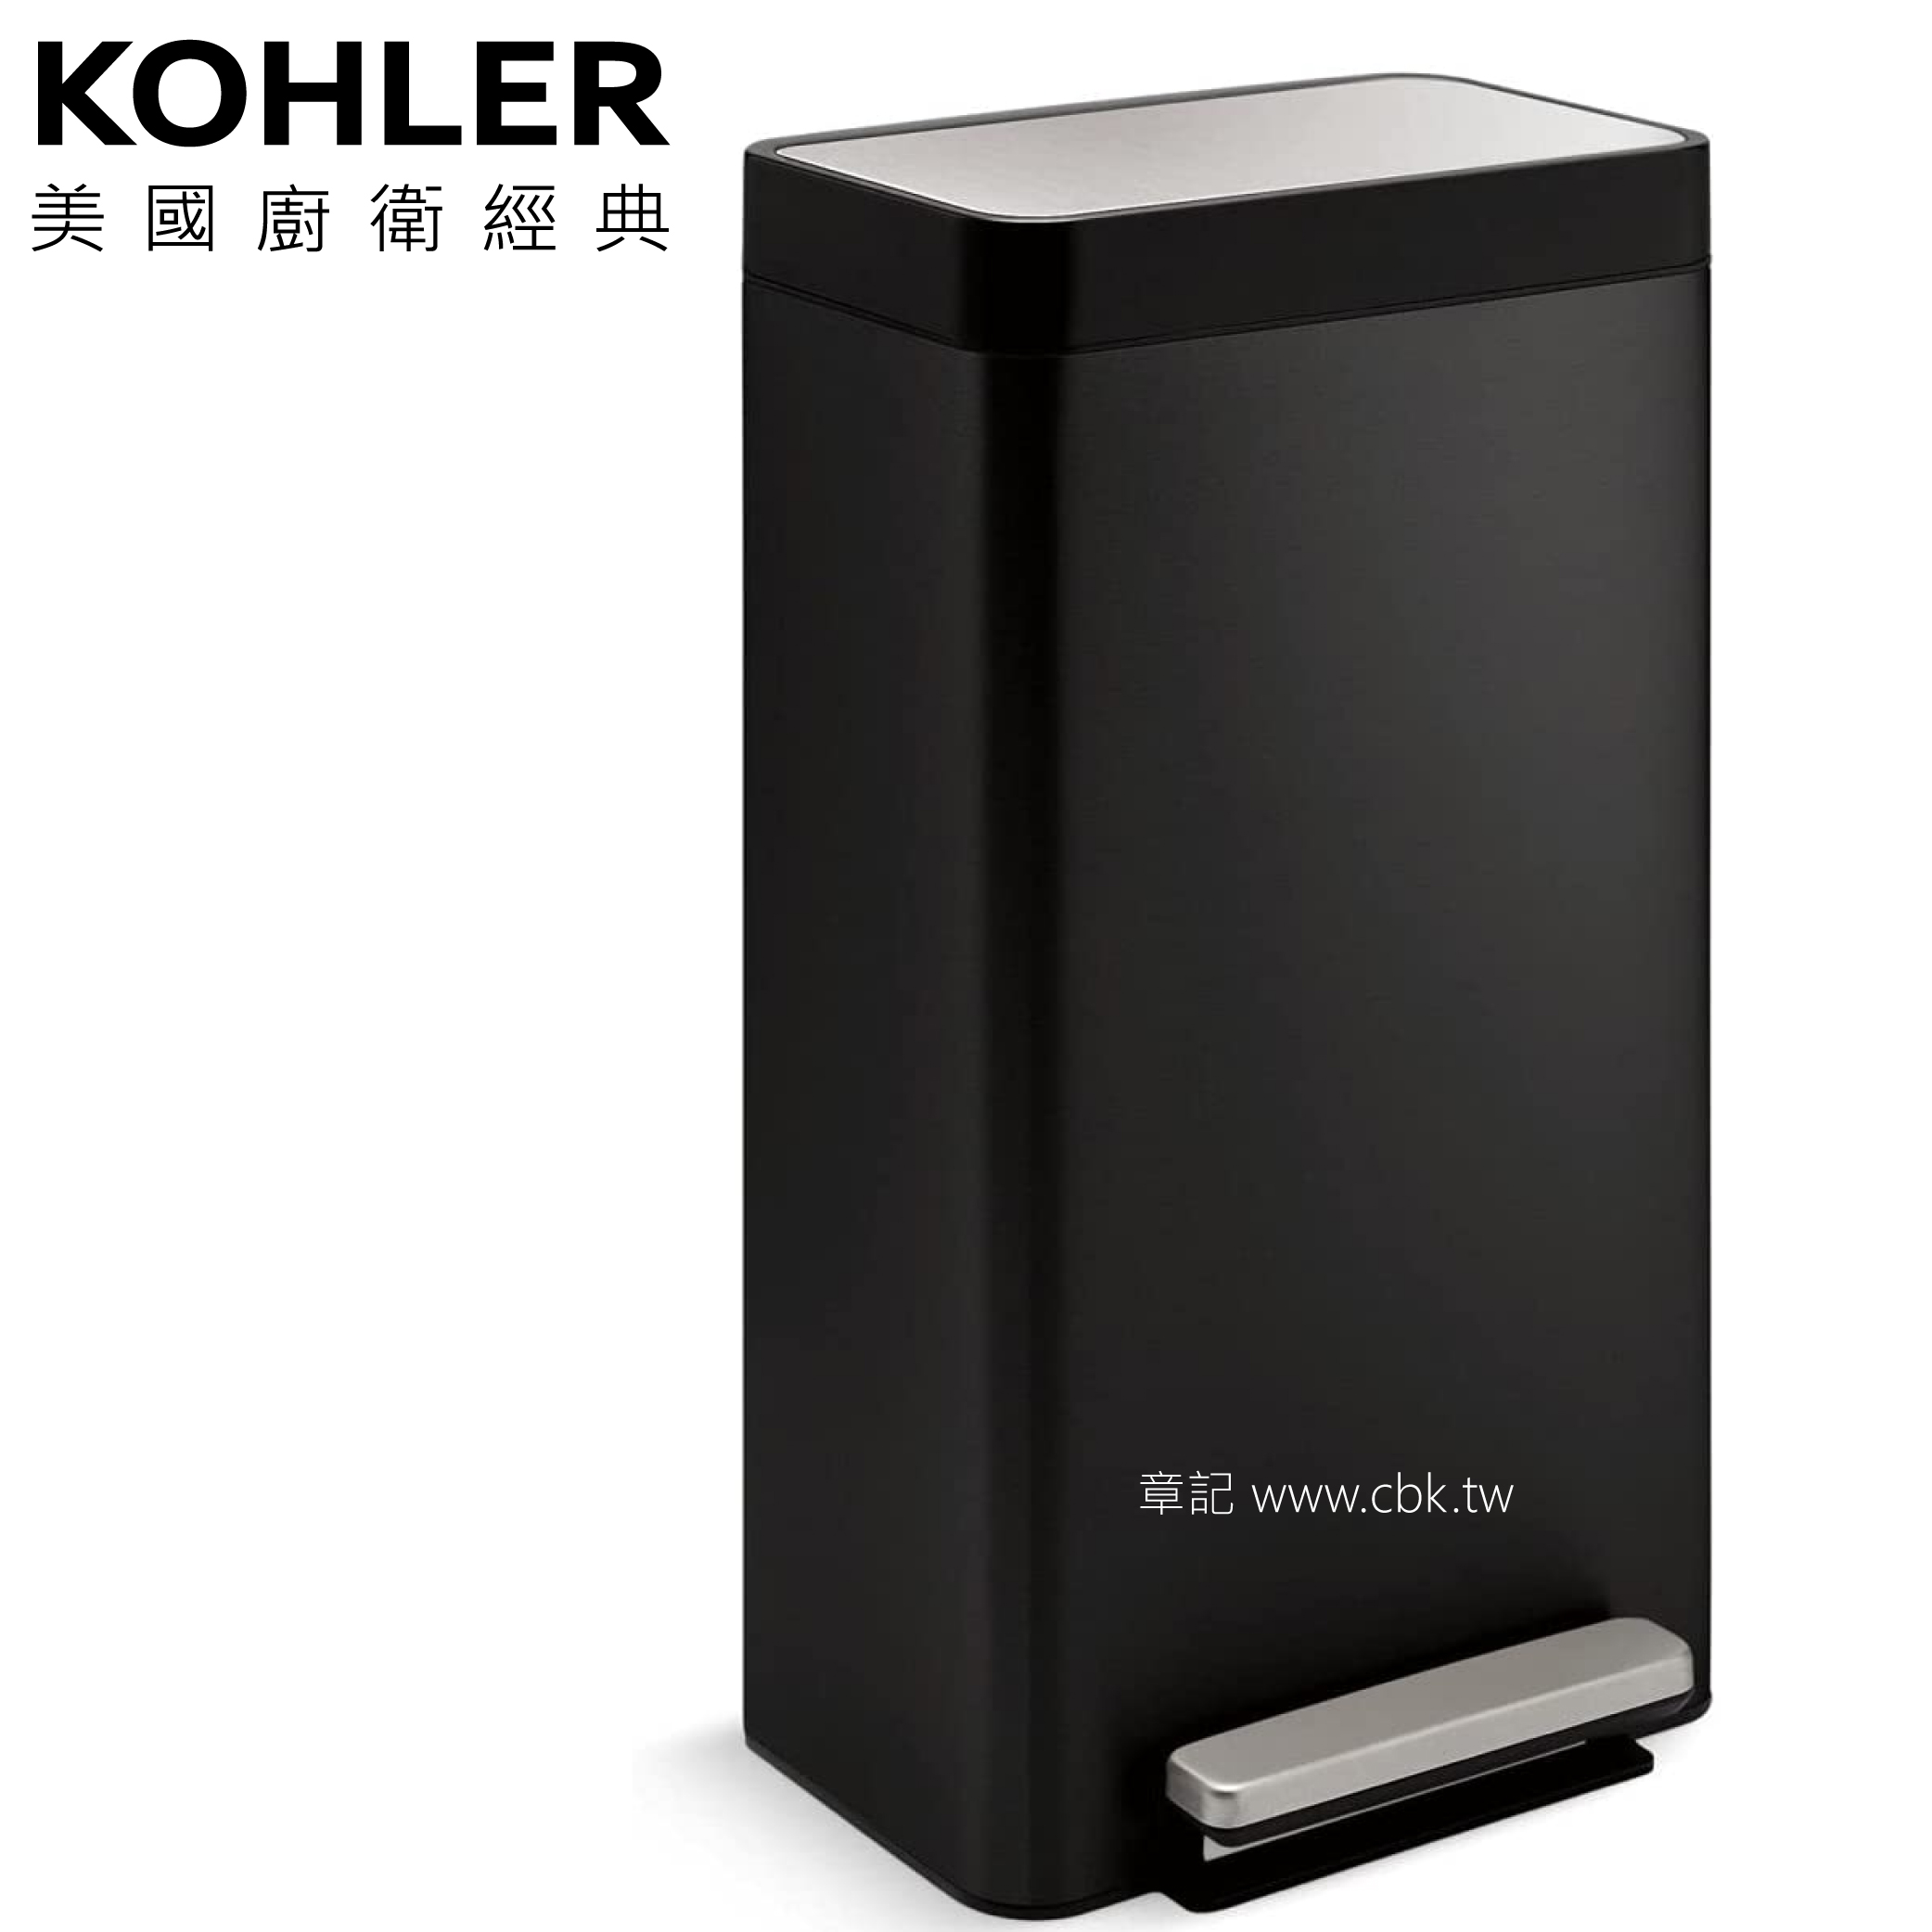 KOHLER 腳踏式不鏽鋼垃圾桶 K-20941-BST  |廚具及配件|五金配件